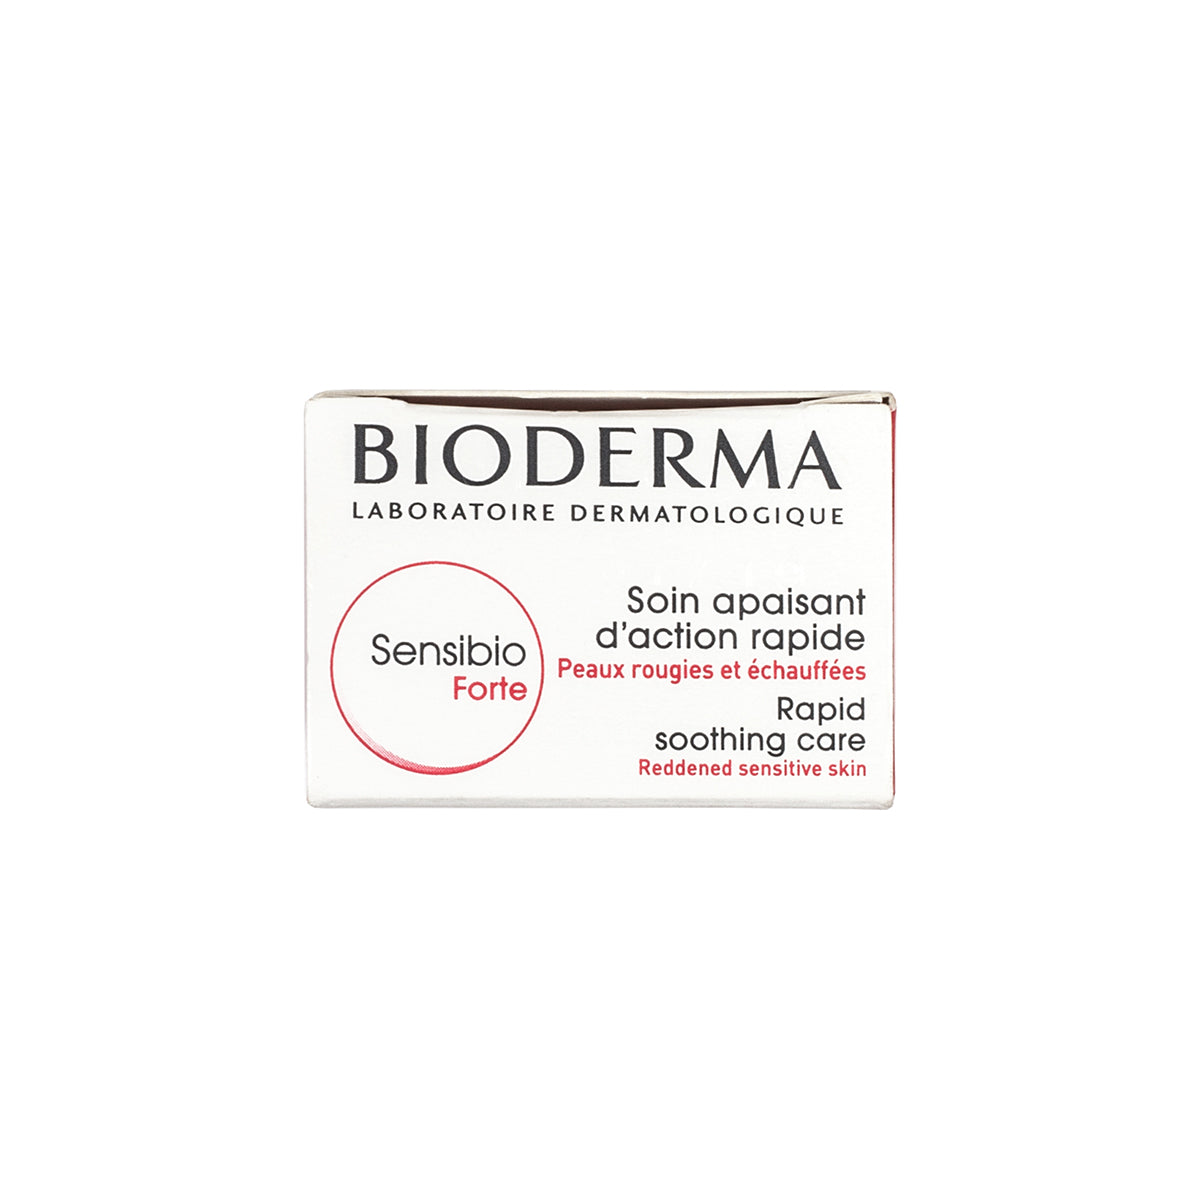 Bioderma Sensibio Forte, Crema para pieles sensibles, 40ml